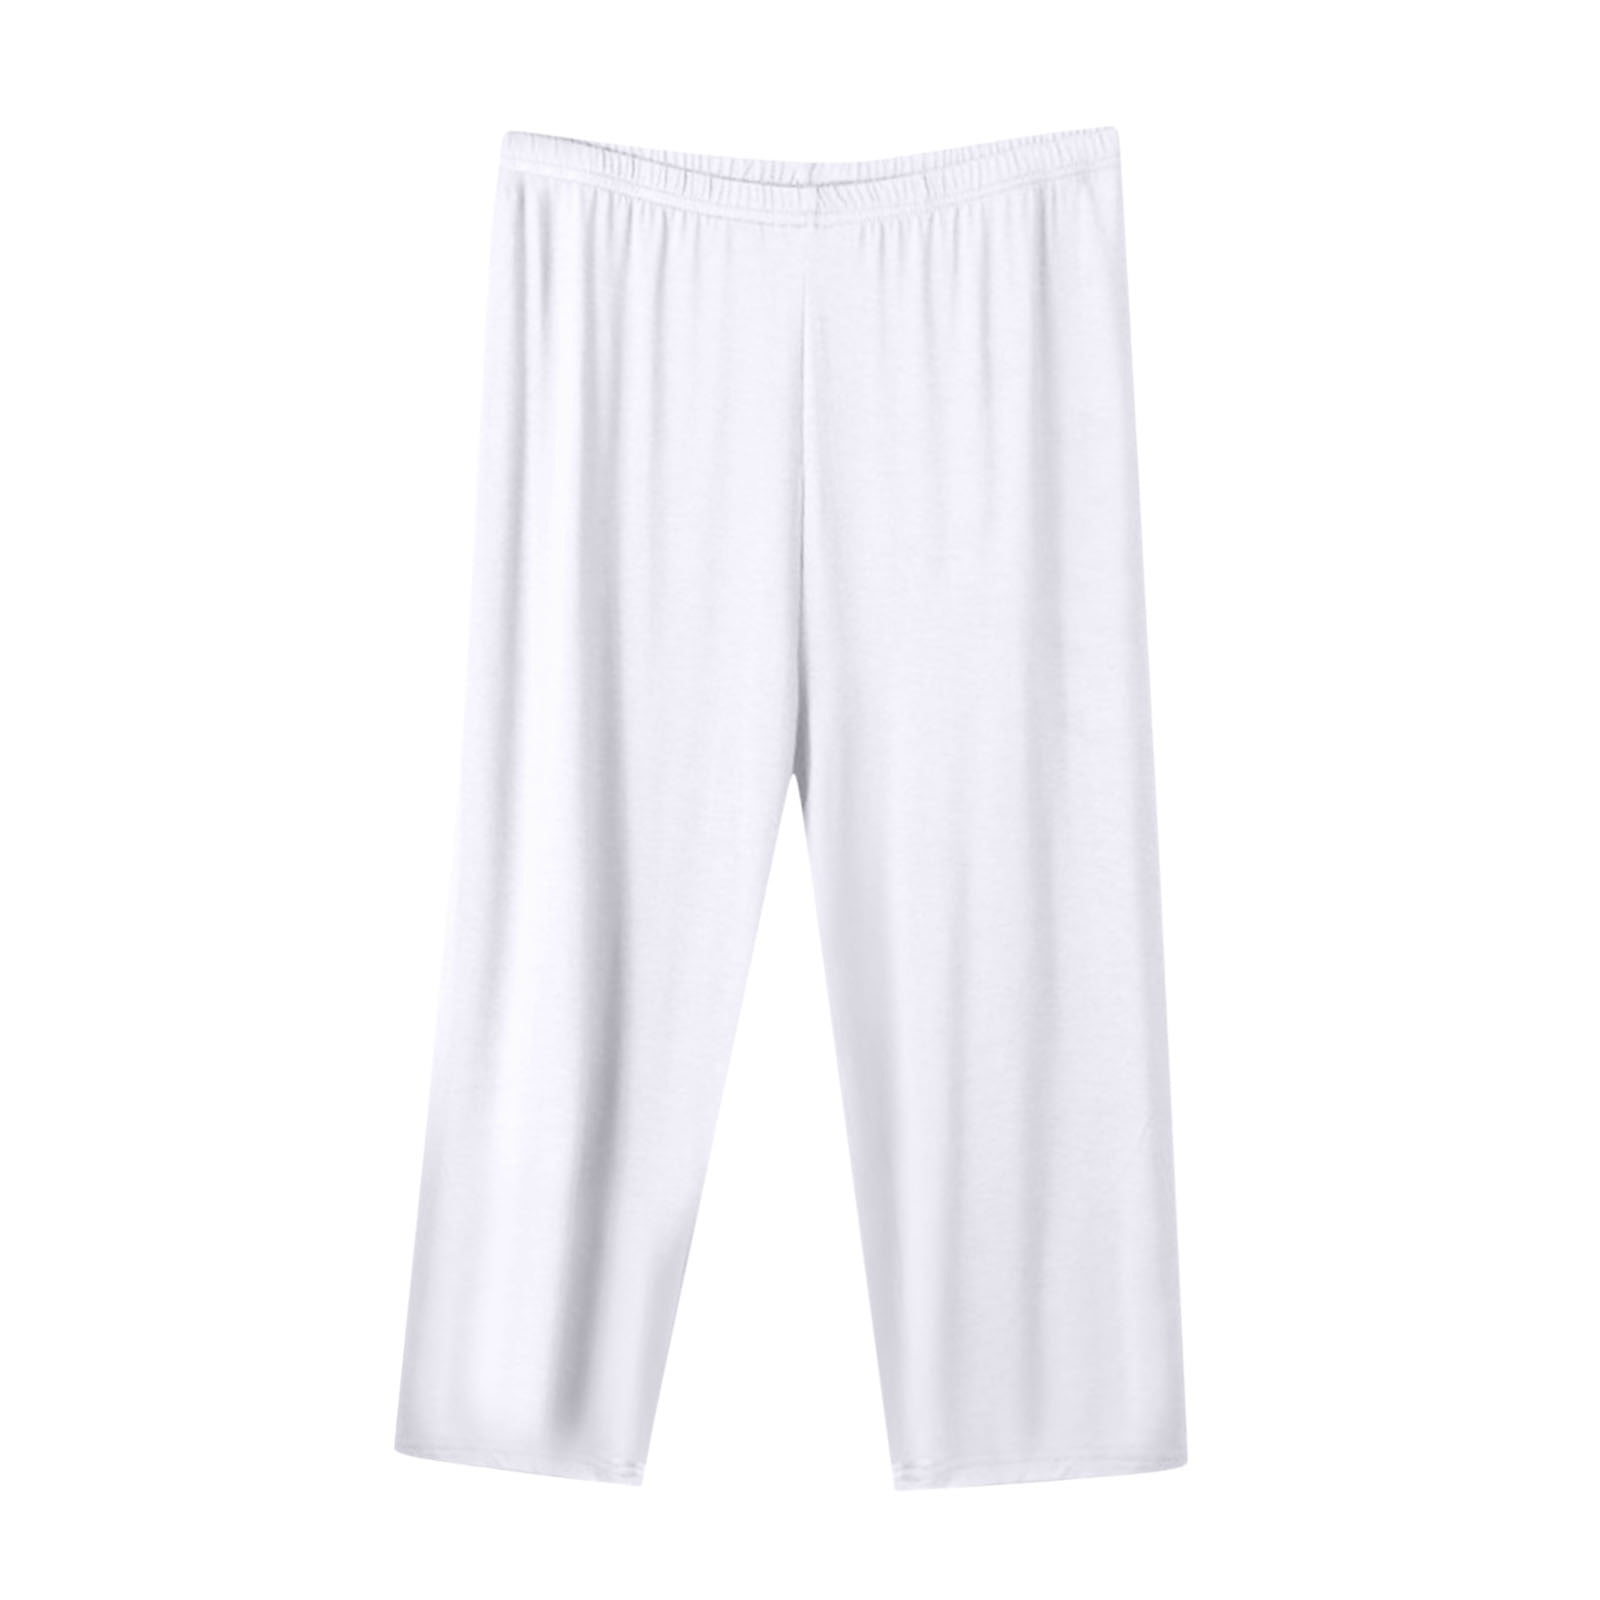 DxhmoneyHX Capri Pajama Pants for Women Soft Lounge Pants Pj Bottoms ...